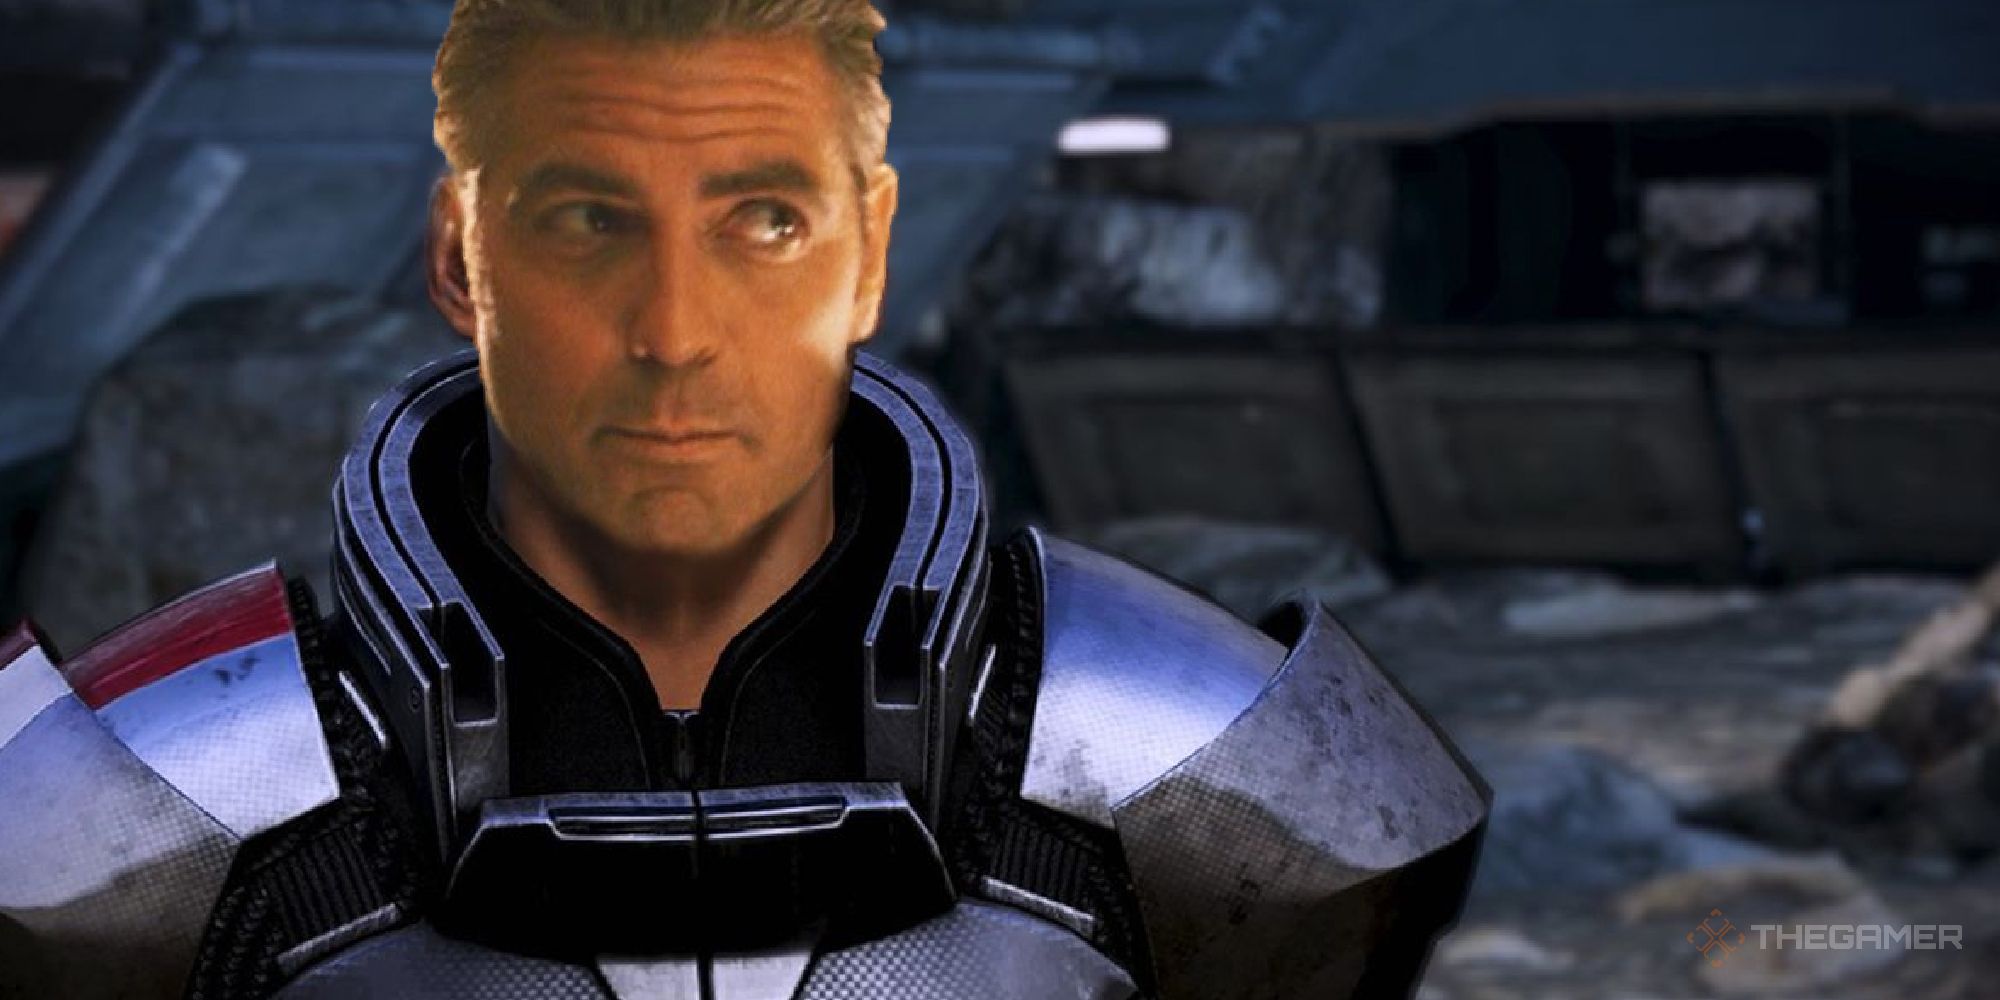 George Clooney Inspired BioWare To Decide How Shepard Should Look In Mass Effect